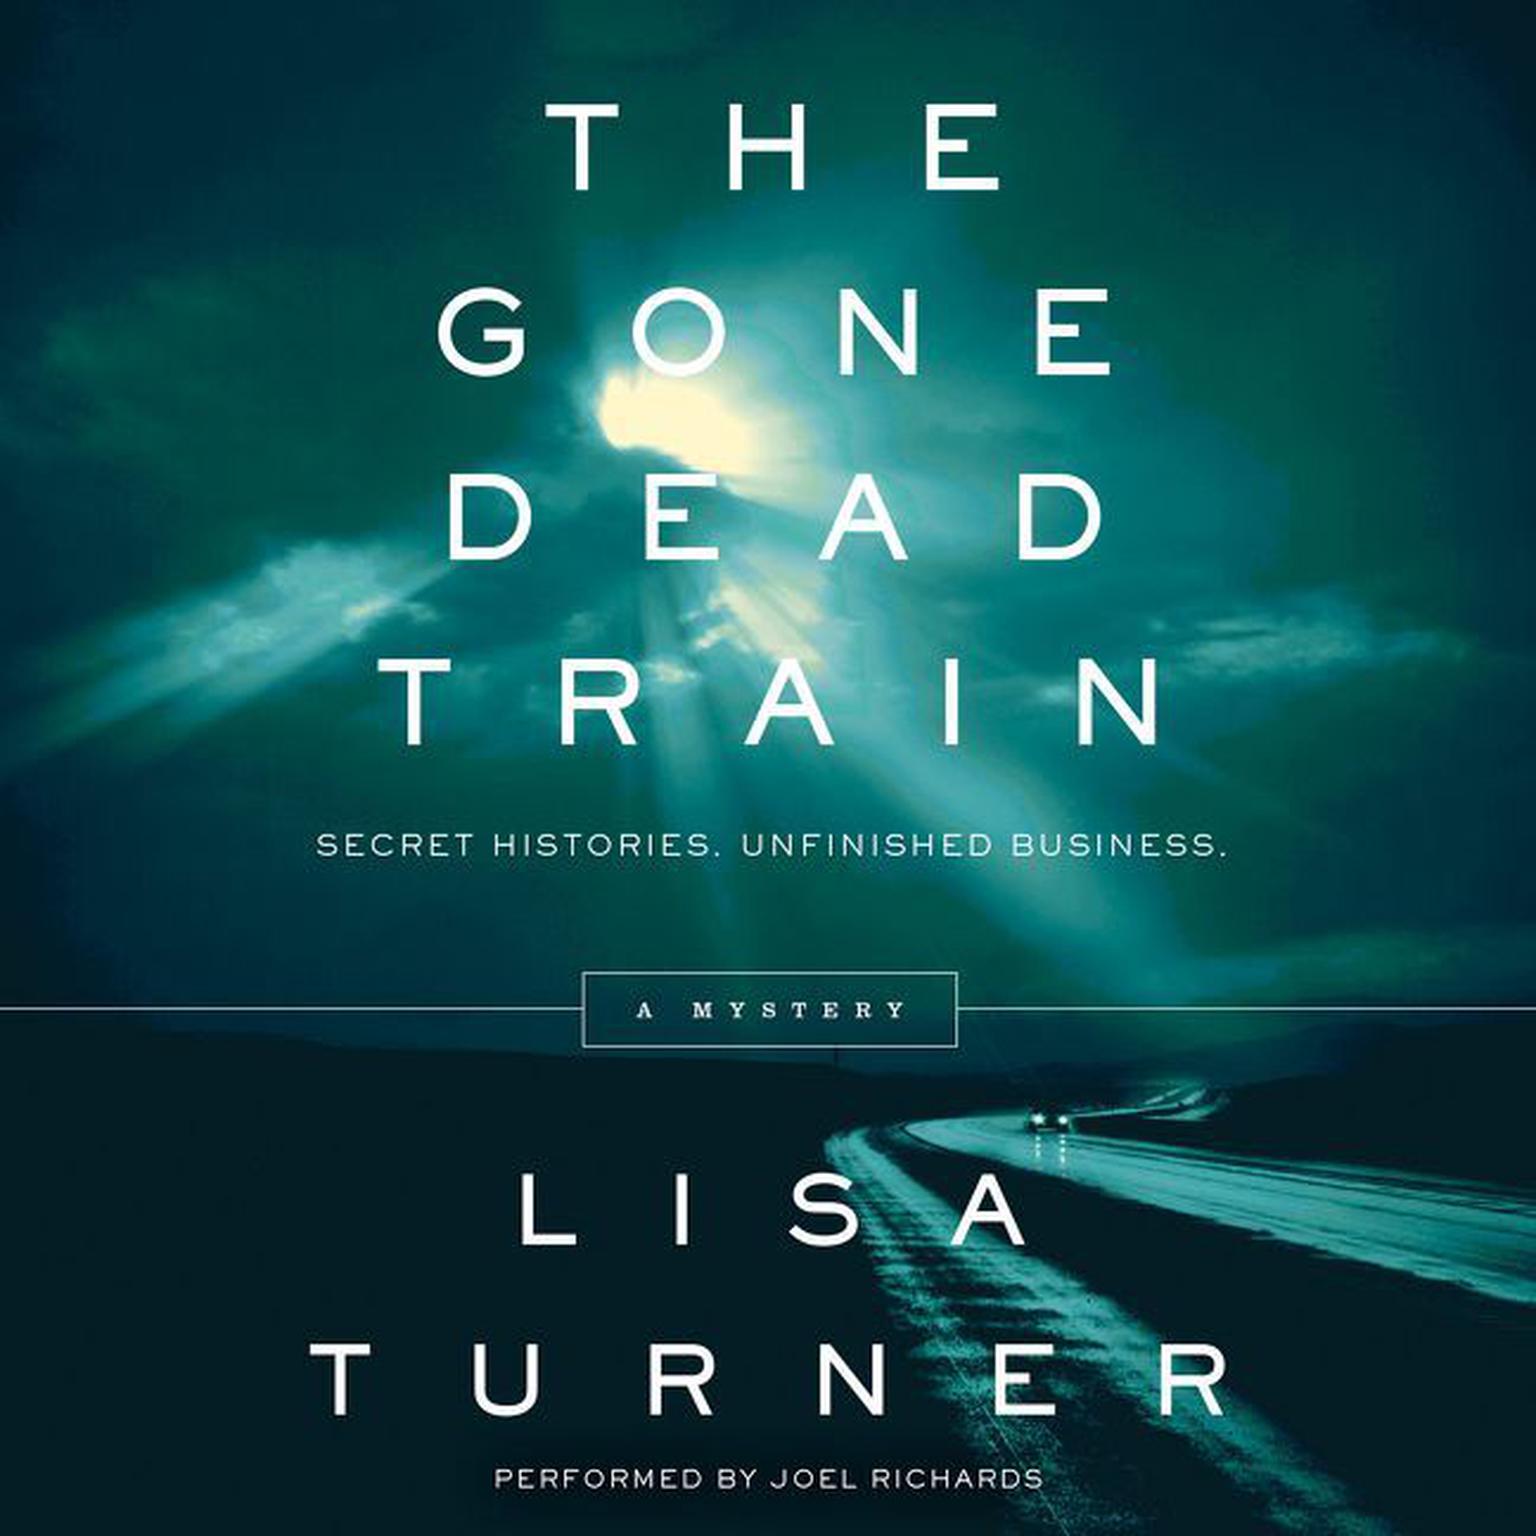 The Gone Dead Train Audiobook By Lisa Turner — Listen Now